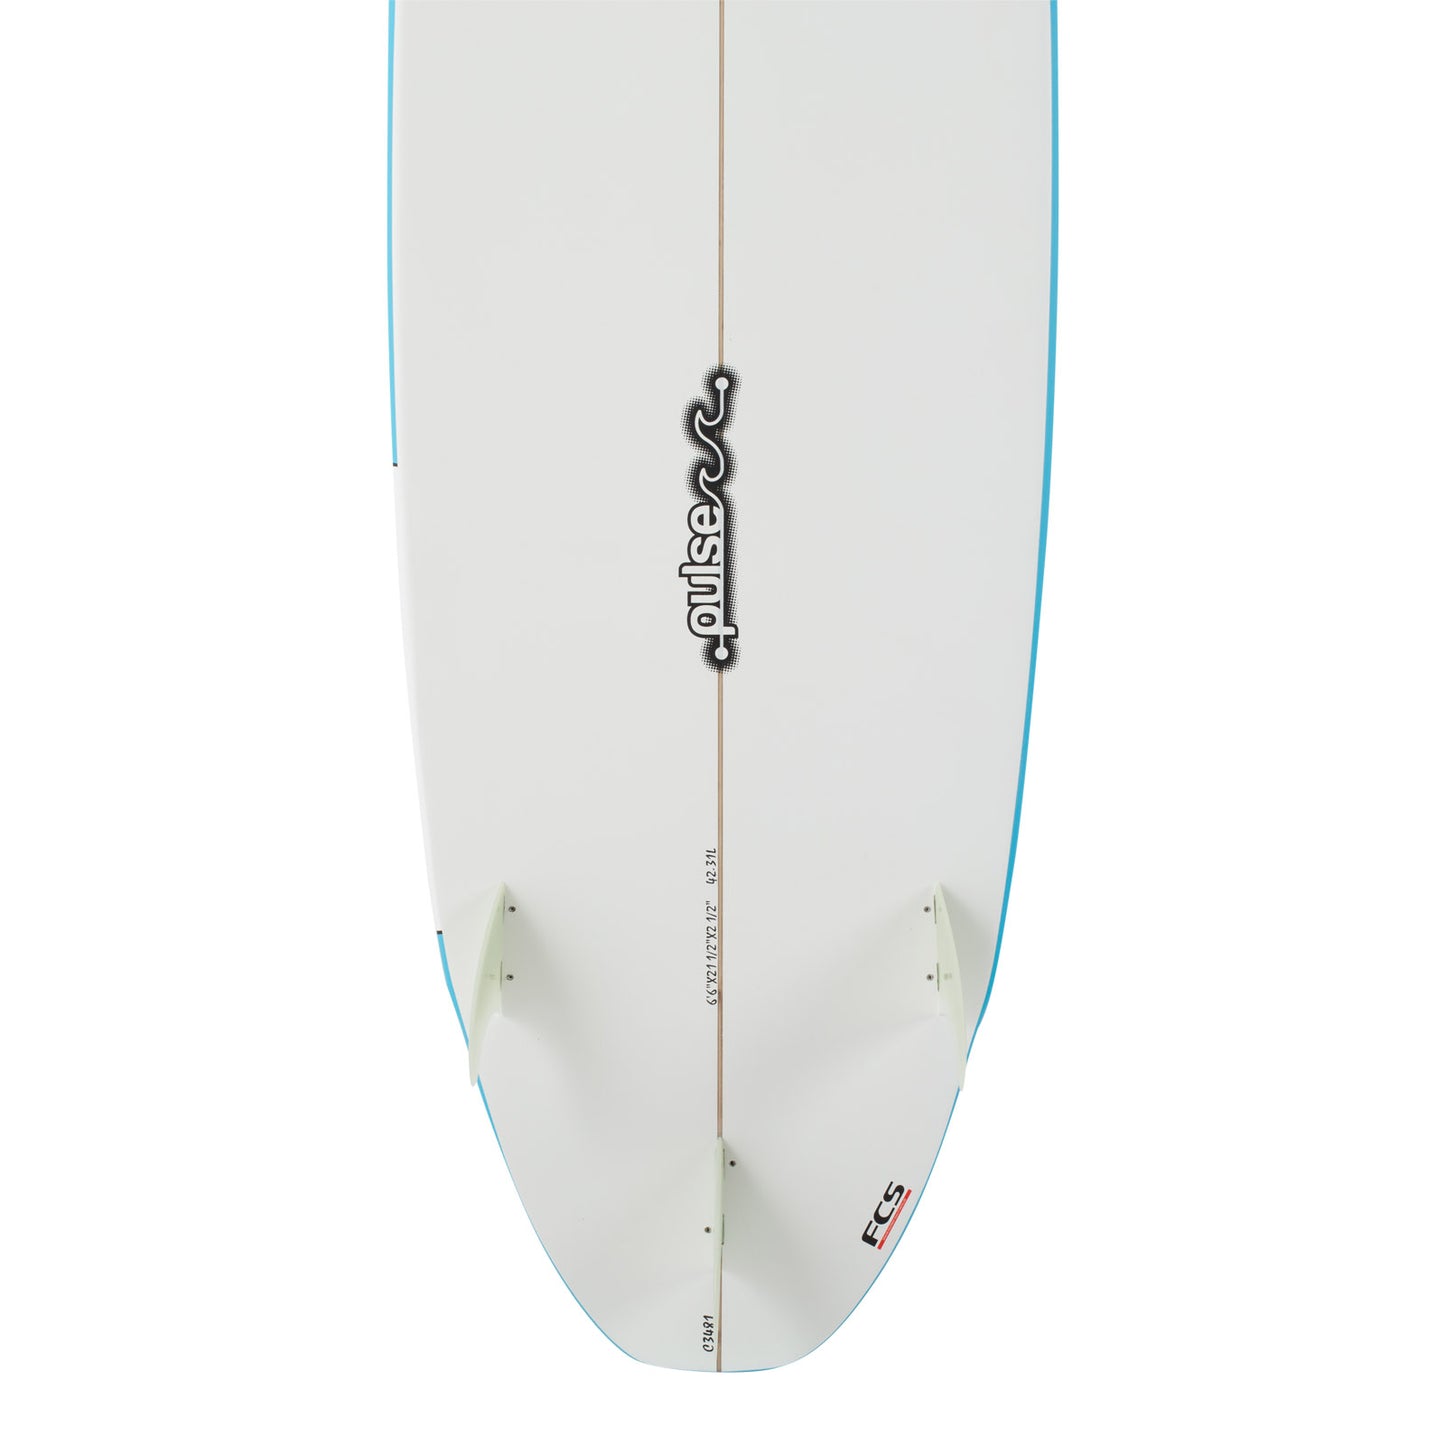 6ft 6inch Pulse Shortboard Surfboard by Australian Board Company Package – Includes Bag, Fins & Leash